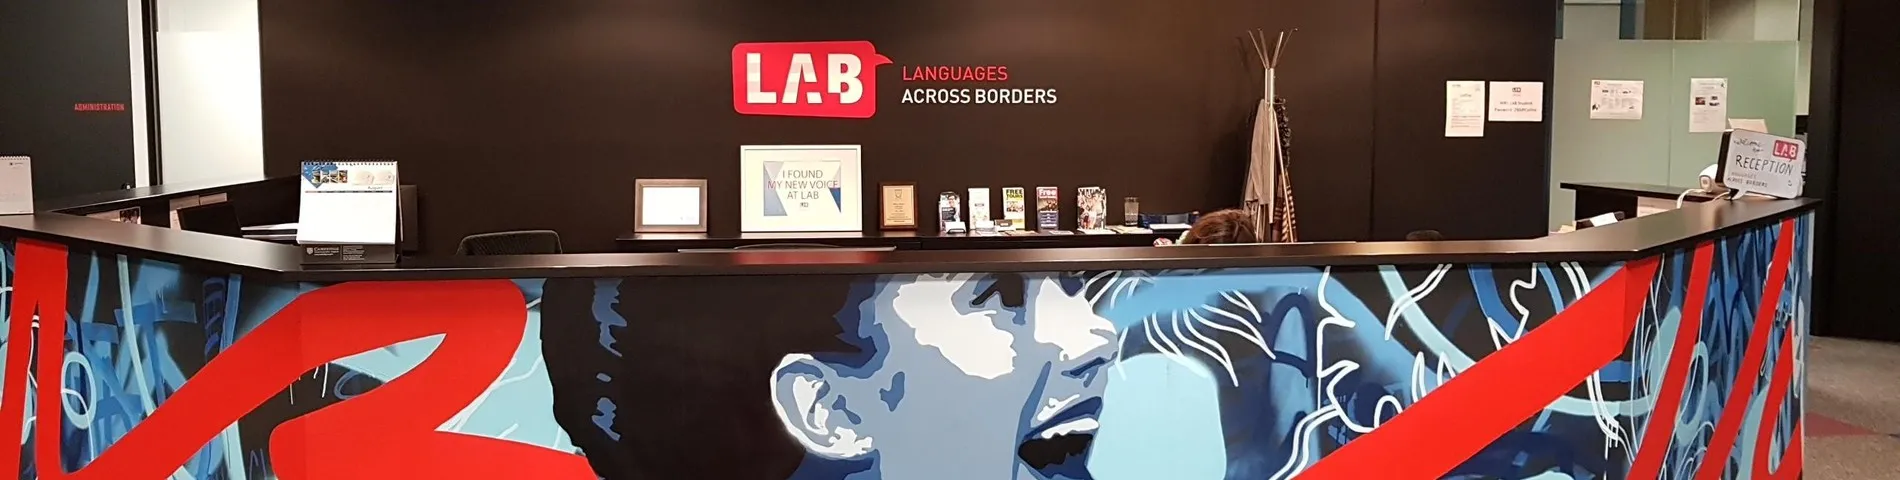 LAB - Languages Across Borders obrazek 1